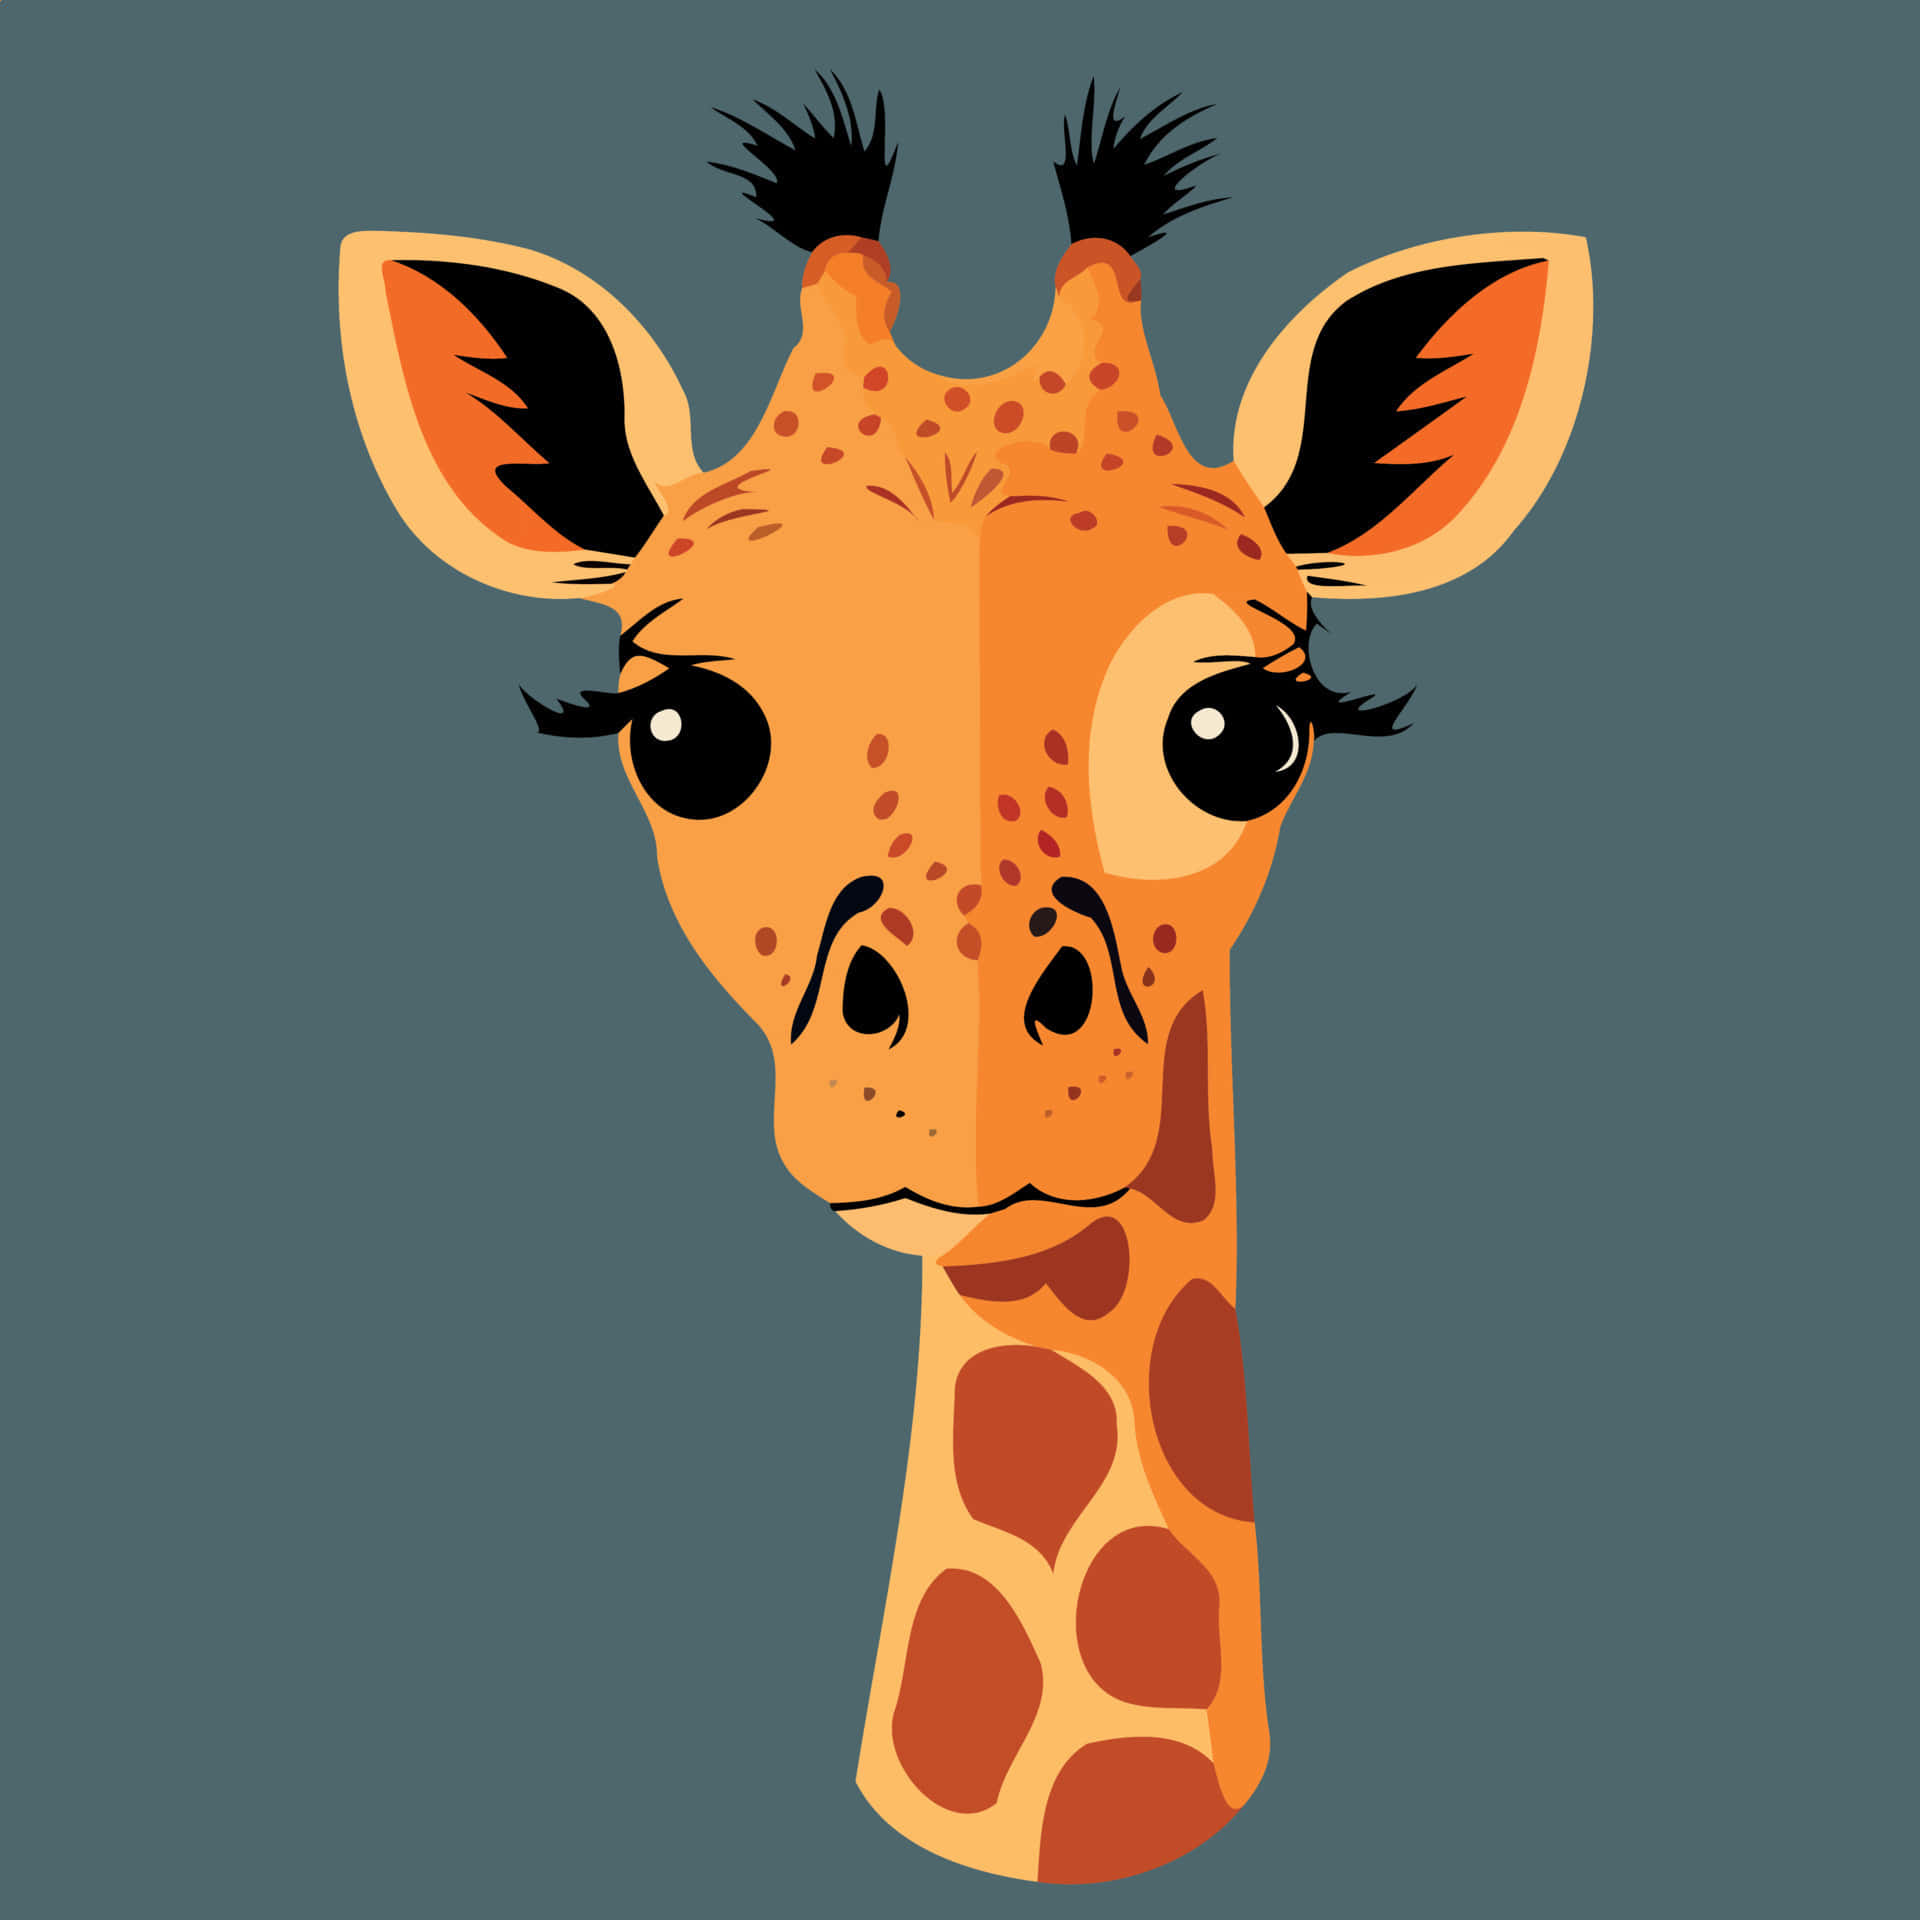 Adorable Kawaii Giraffe With Heart-Shaped Spots Wallpaper